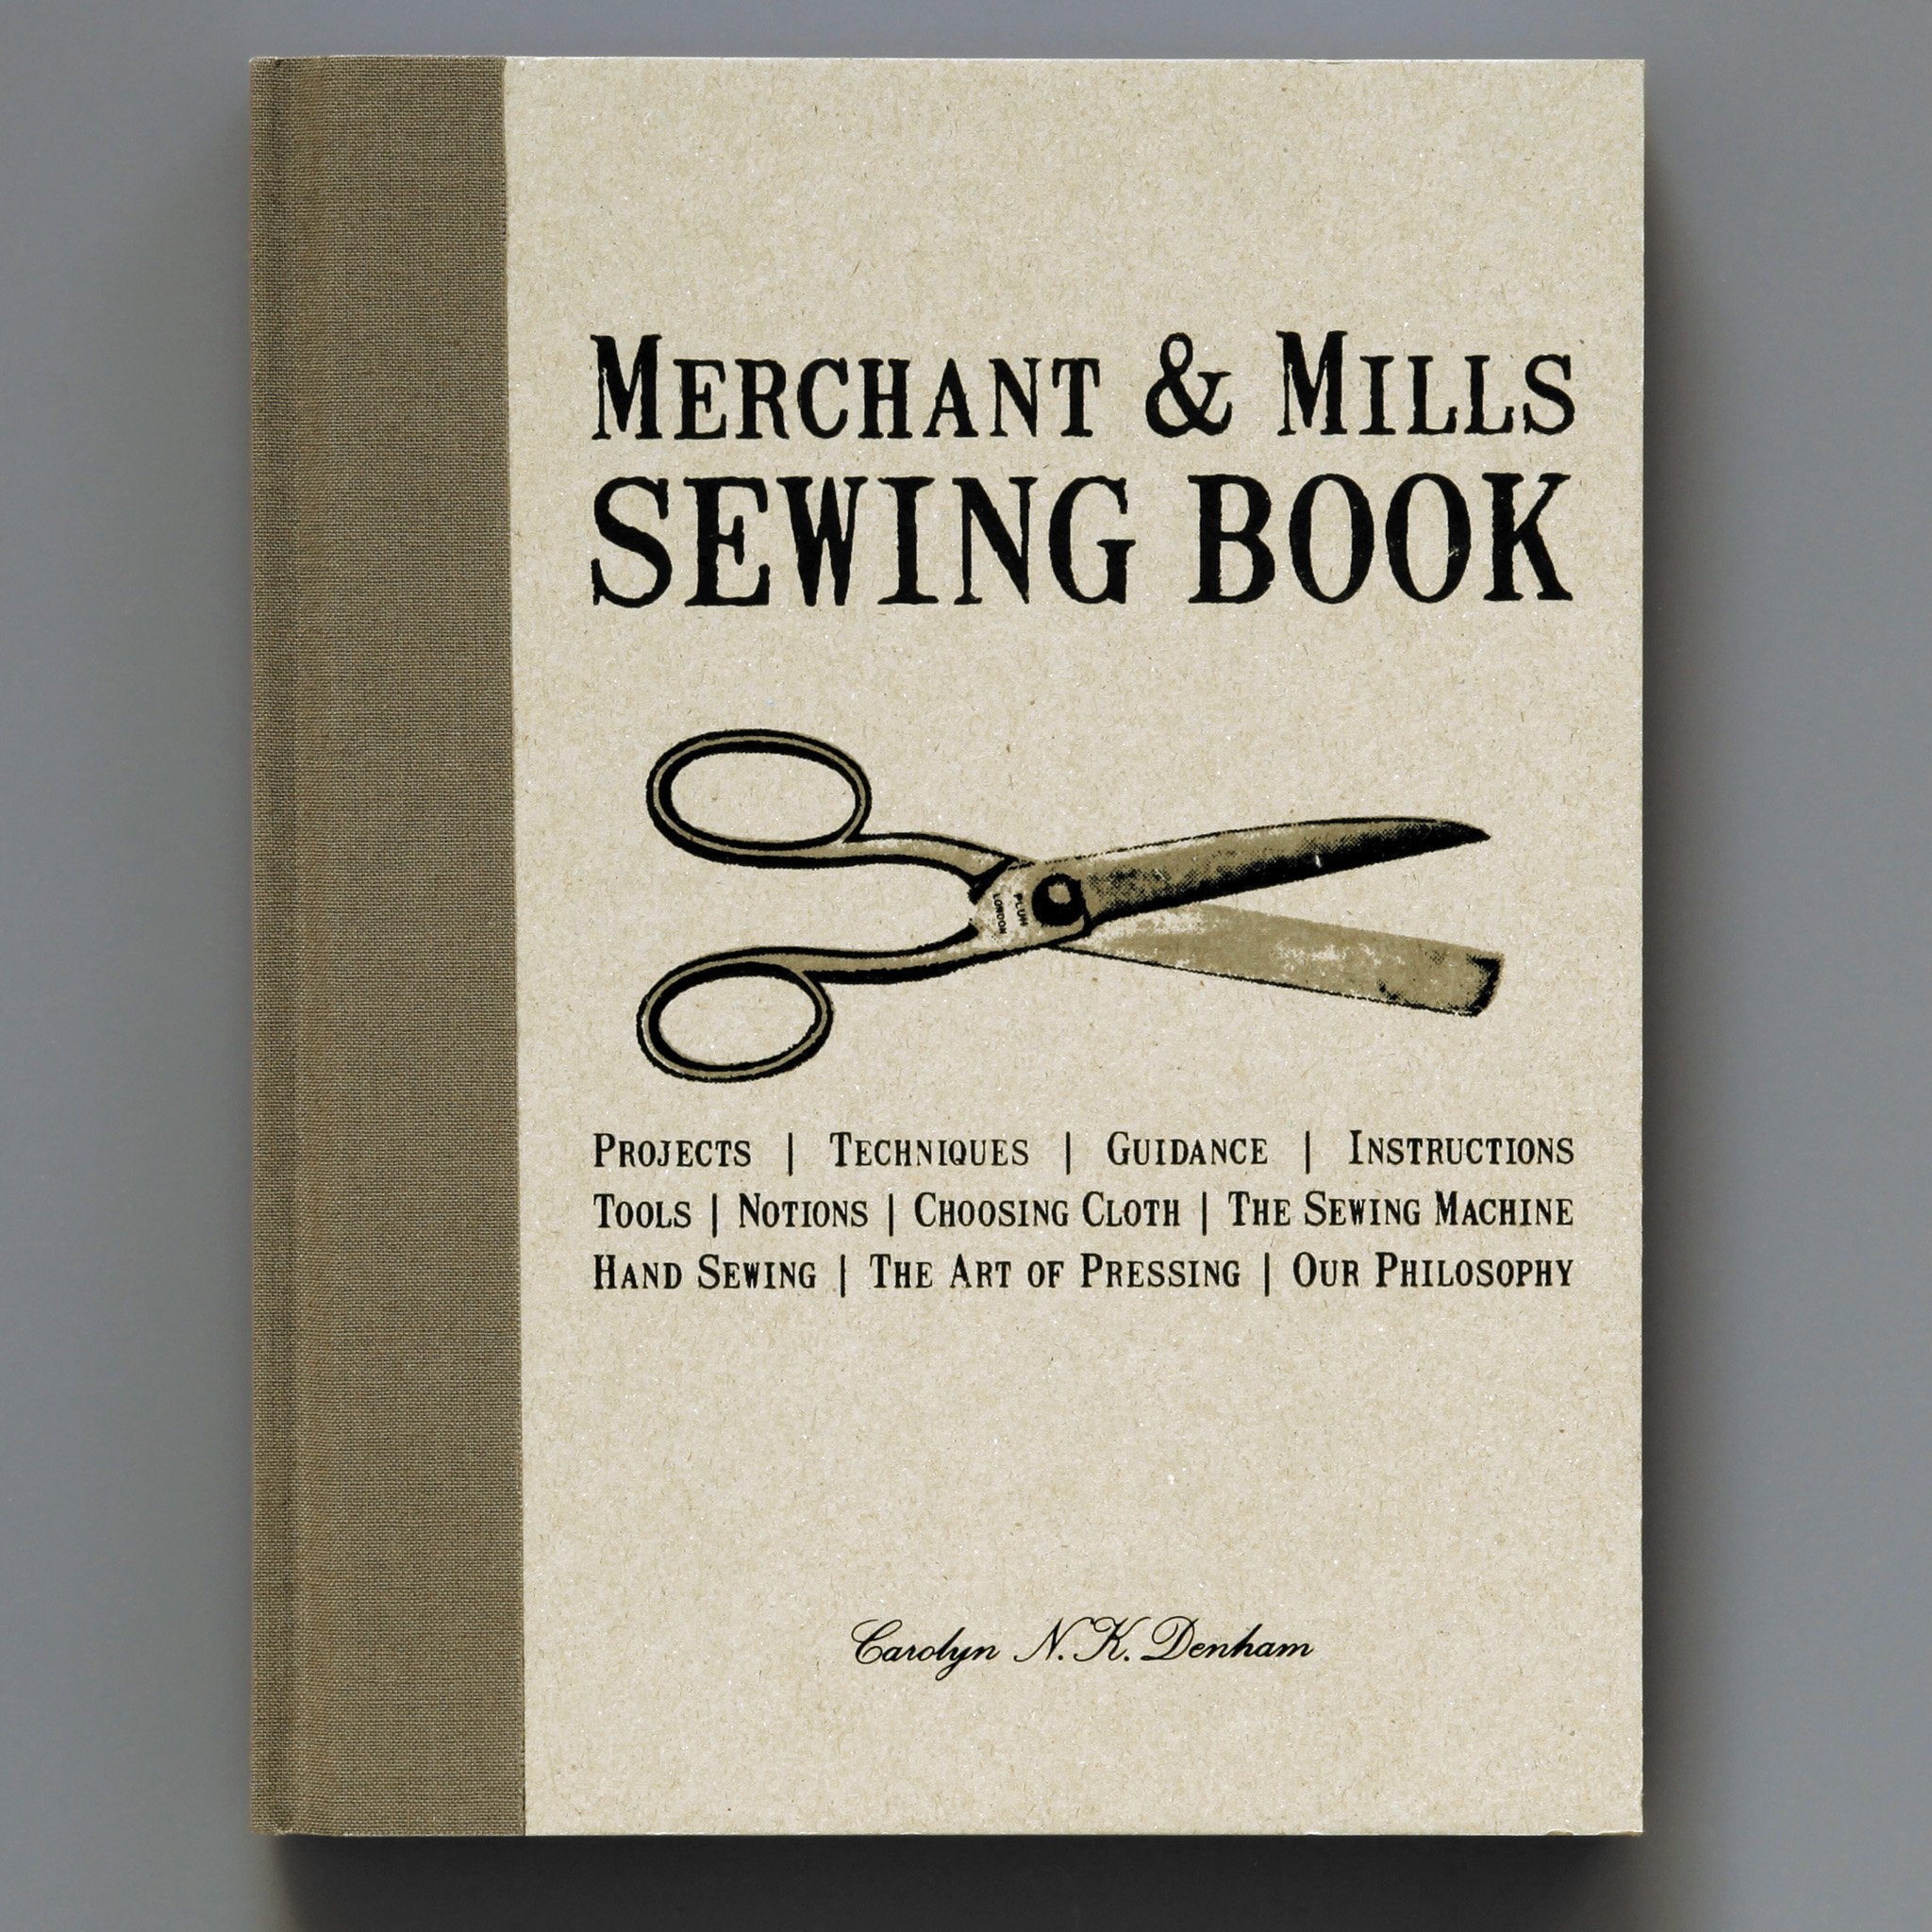 Merchant & Mills Sewing Book